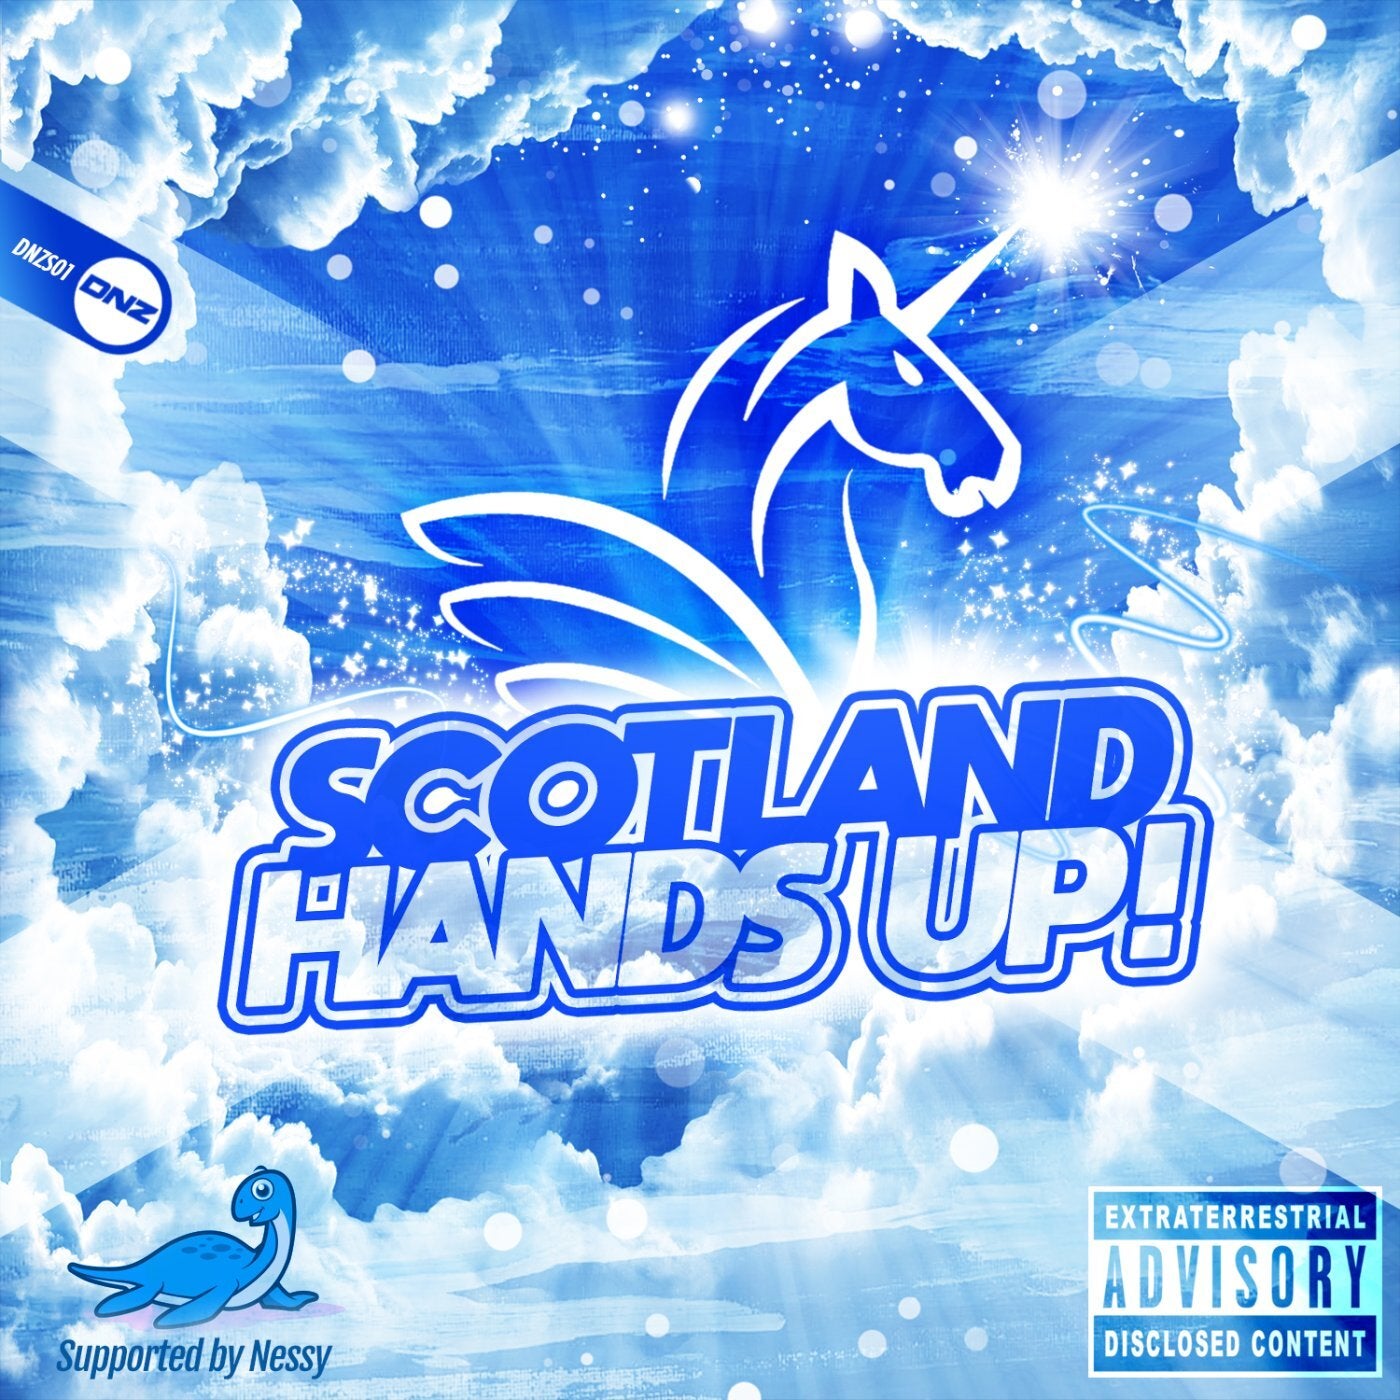 Scotland Hands Up!